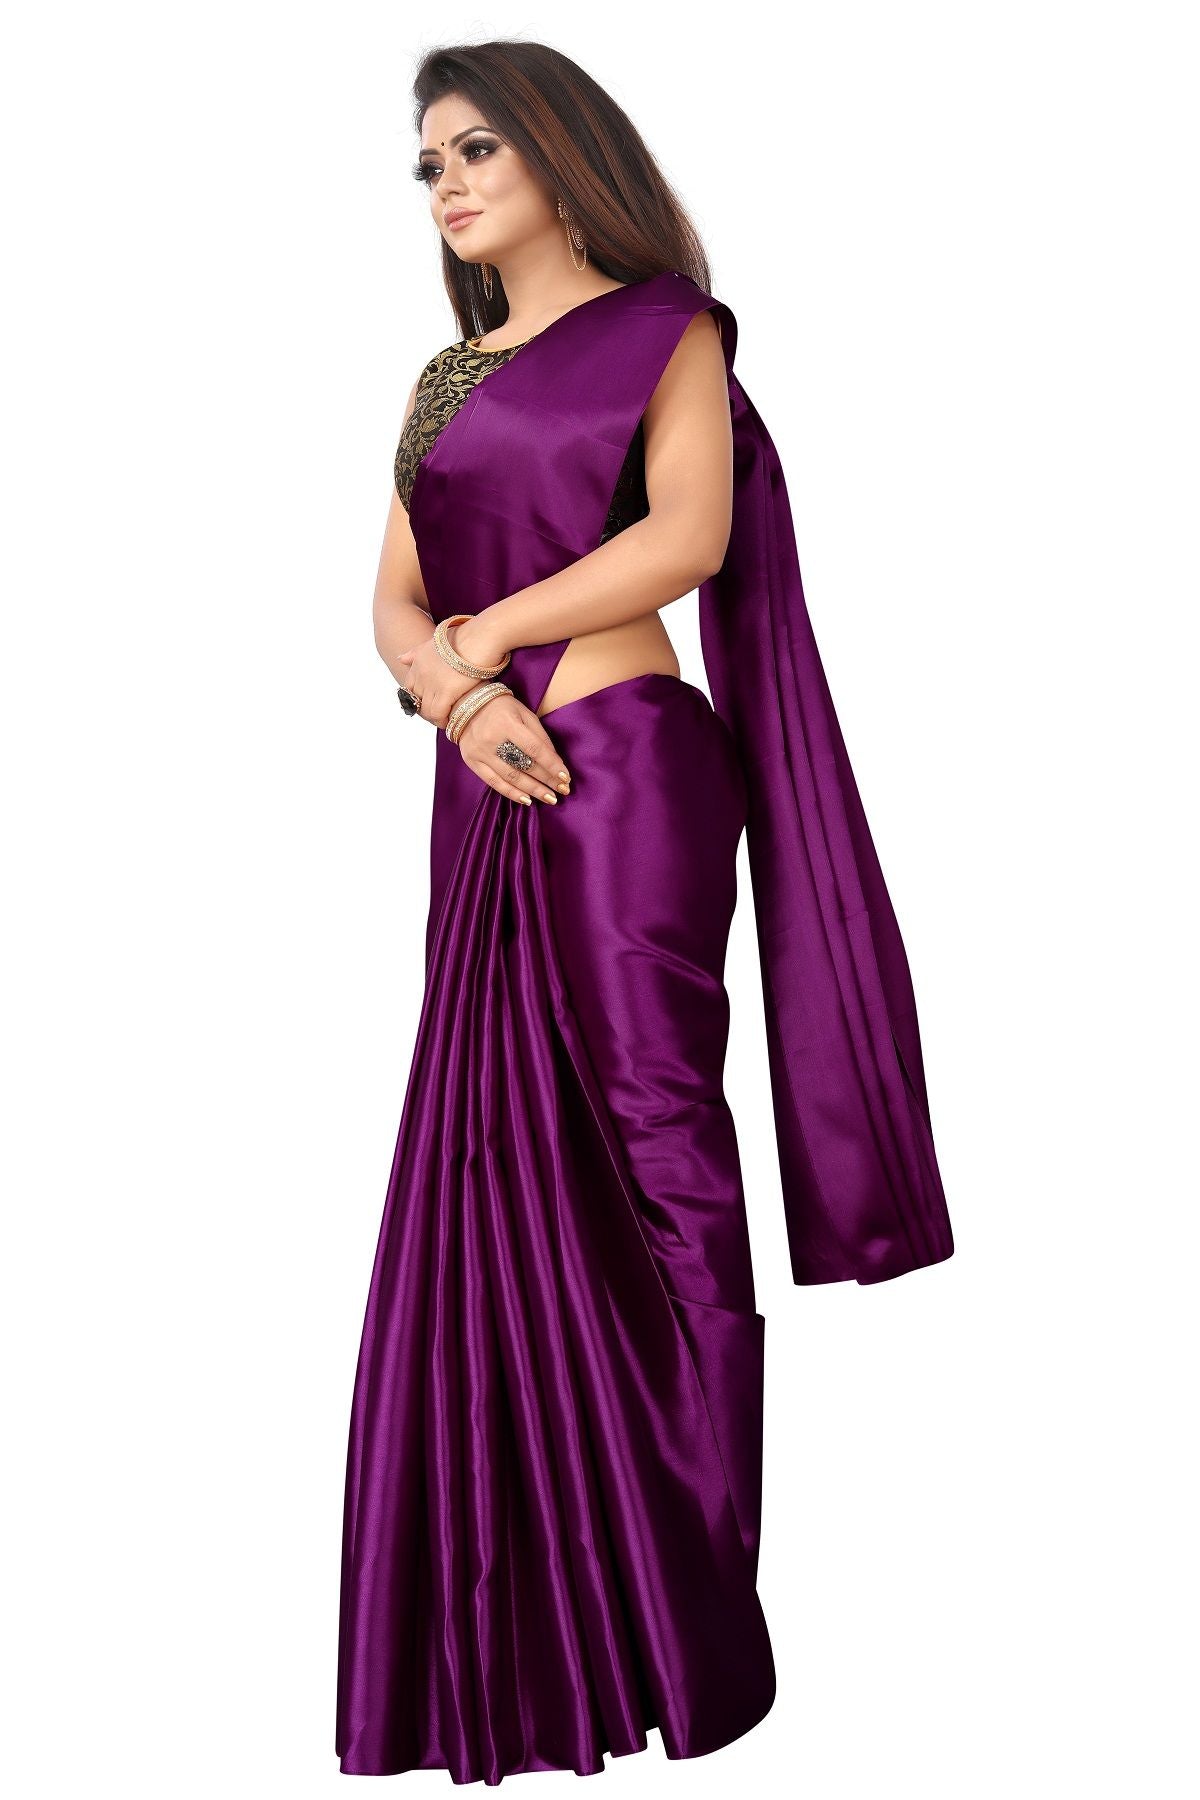 Women's Violet Satin Designer Saree - Vamika